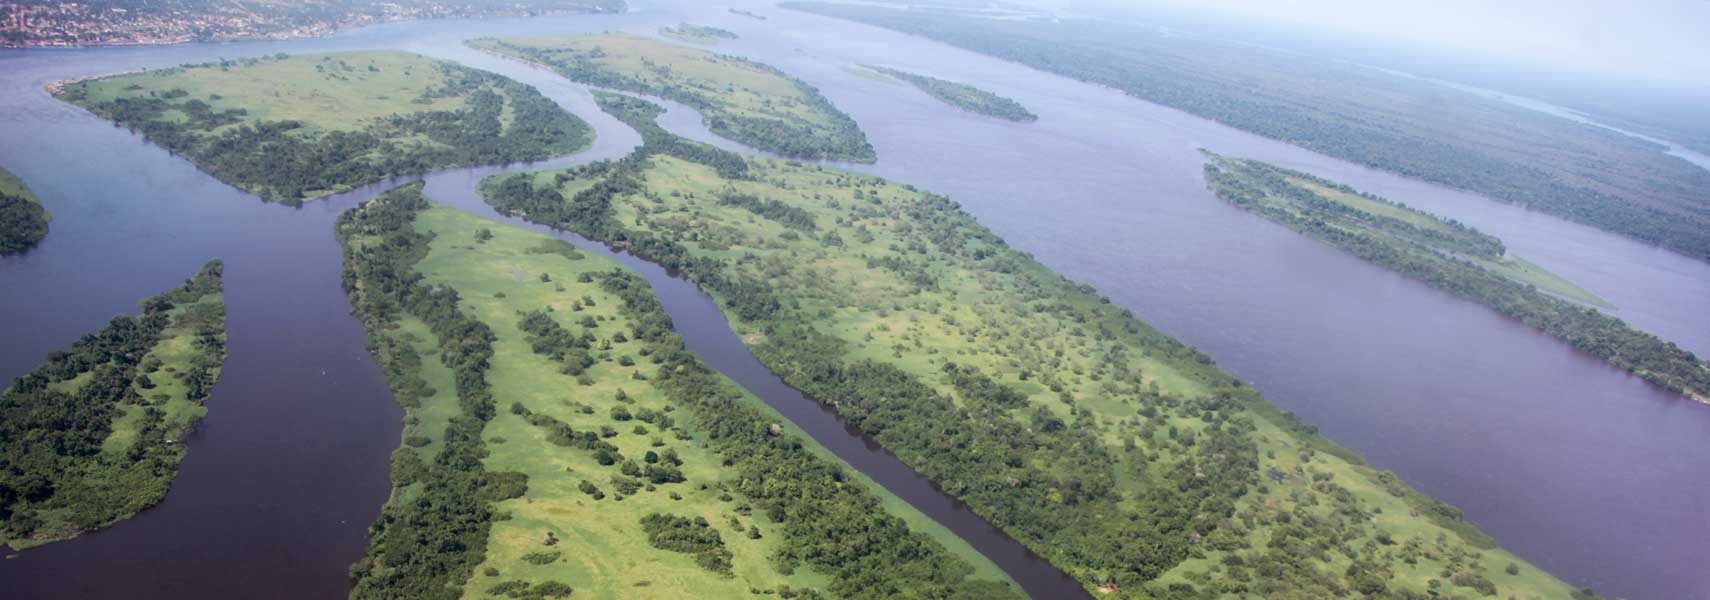 Aerial view of the Congo River near Kisangani, capital of Orientale Province, Democratic Republic of the Congo